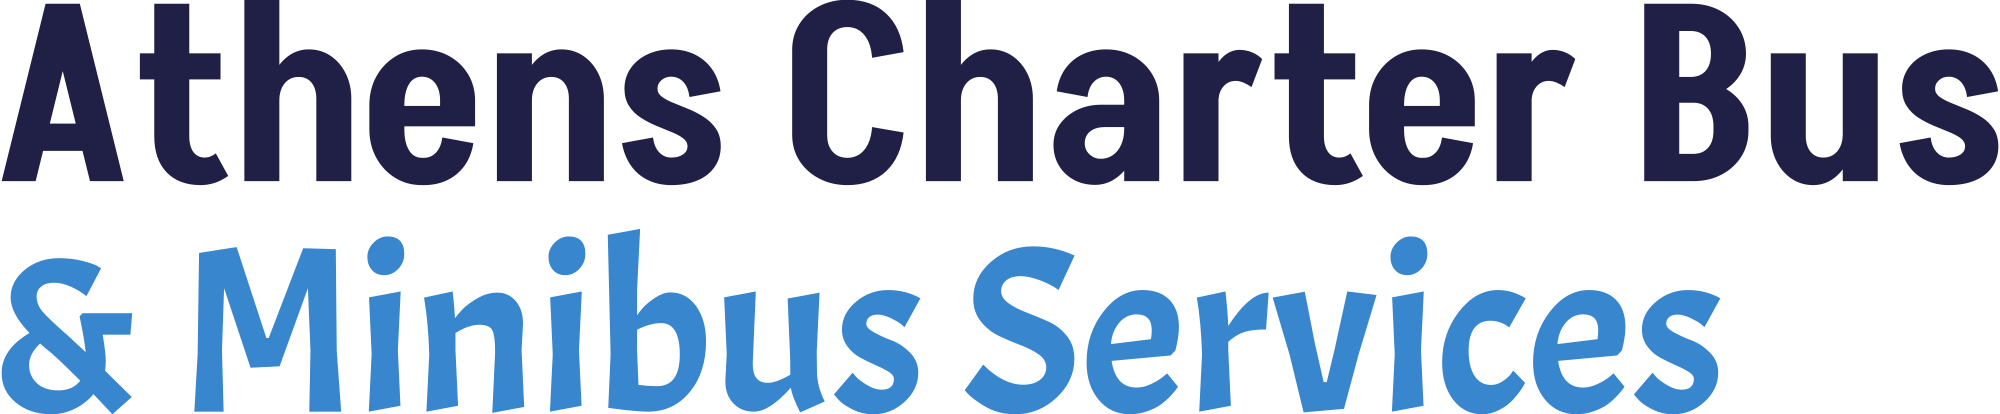 Charter Bus Athens logo